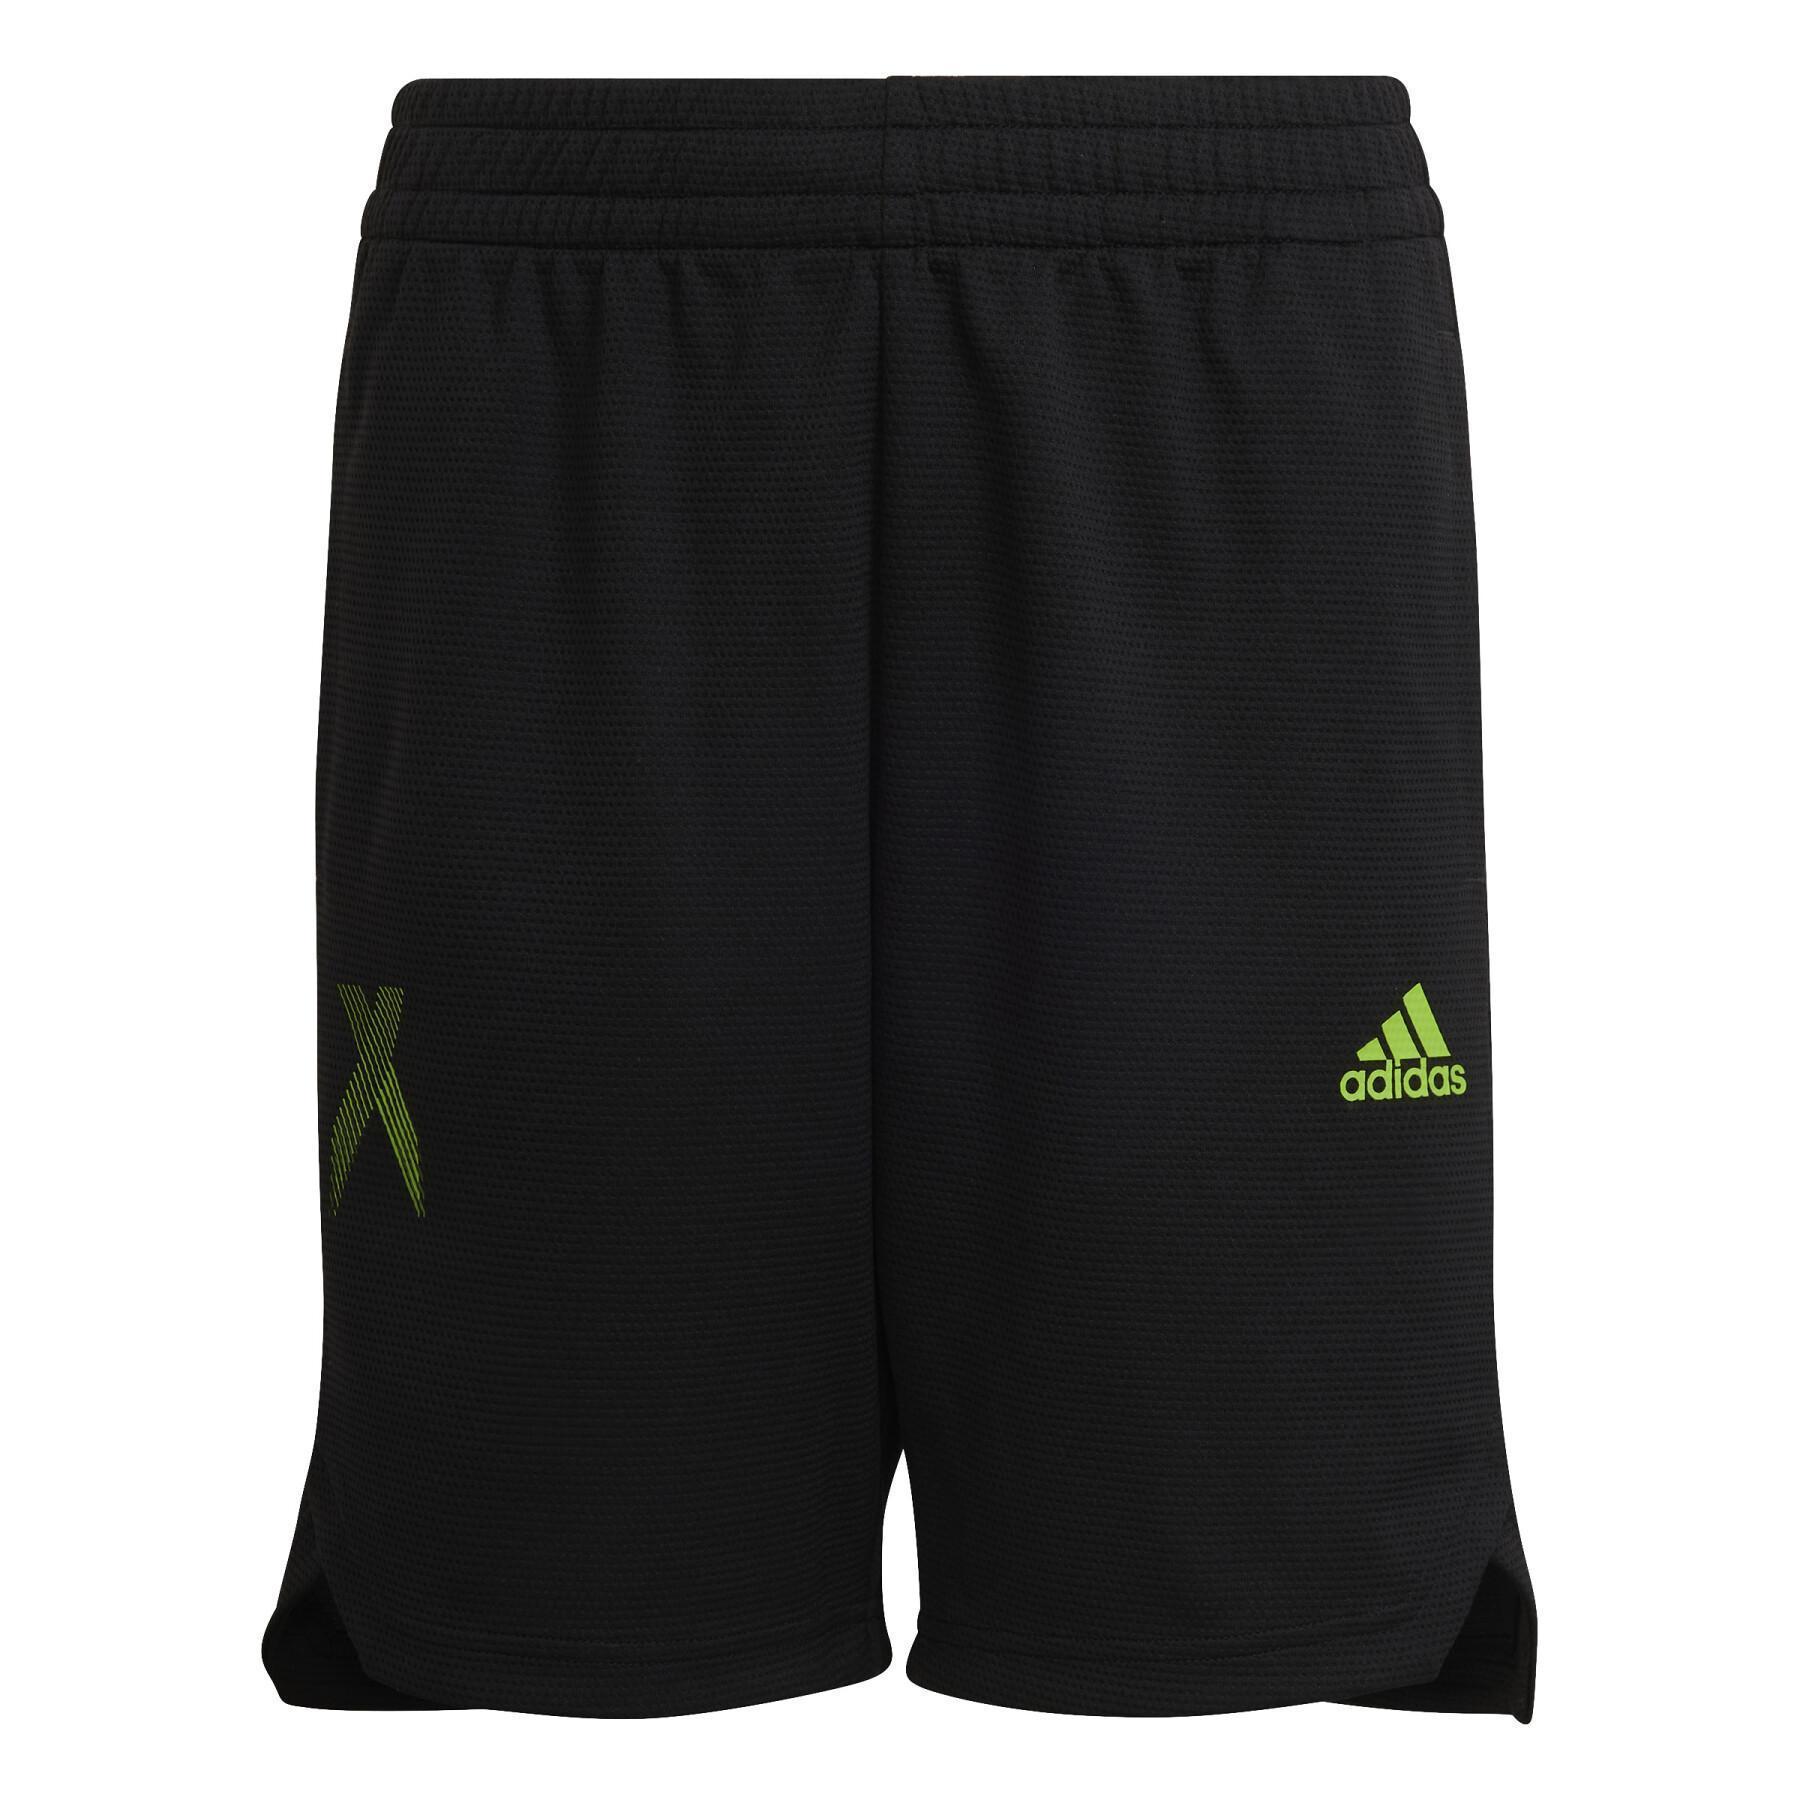 Kinder shorts adidas Football-Inspired X